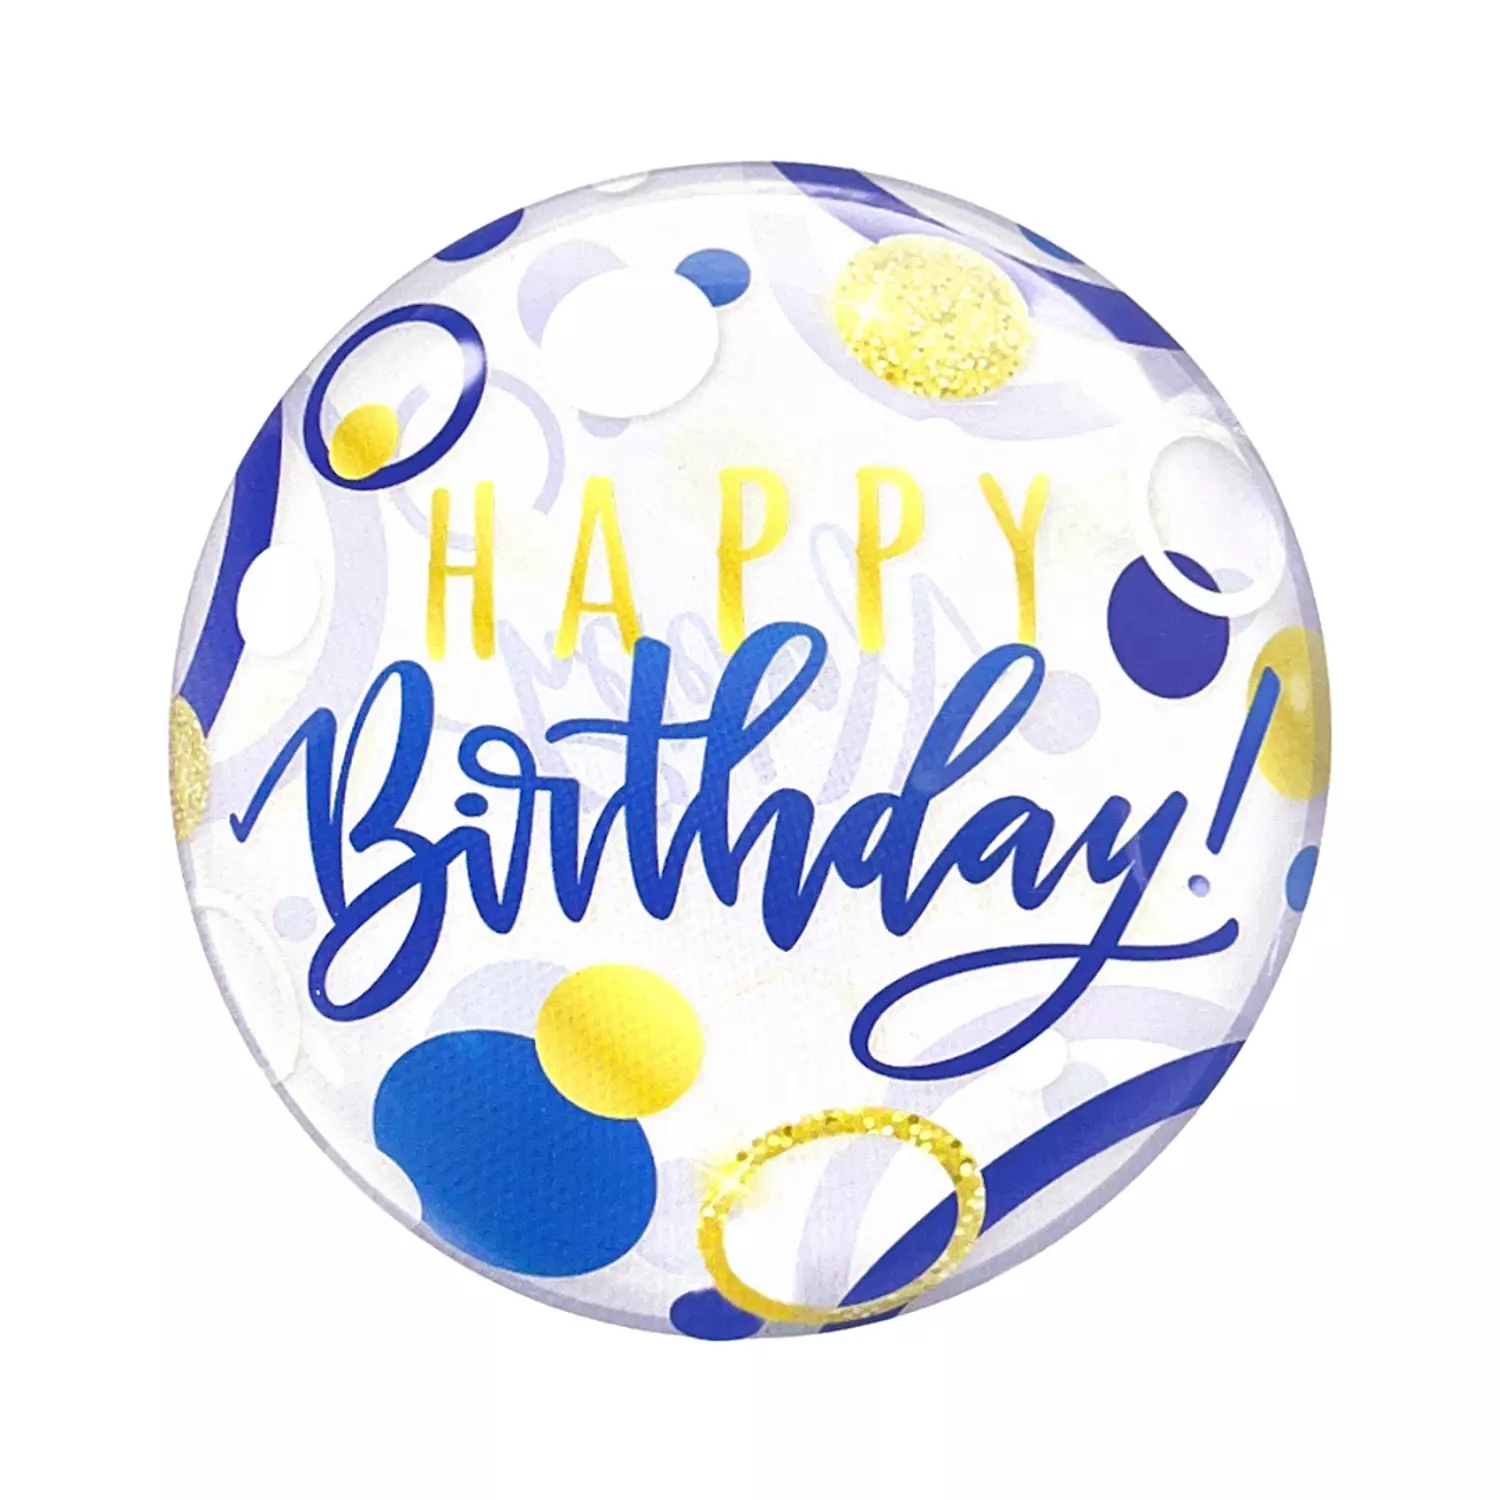 Blue Happy Birthday Round Balloon hover image